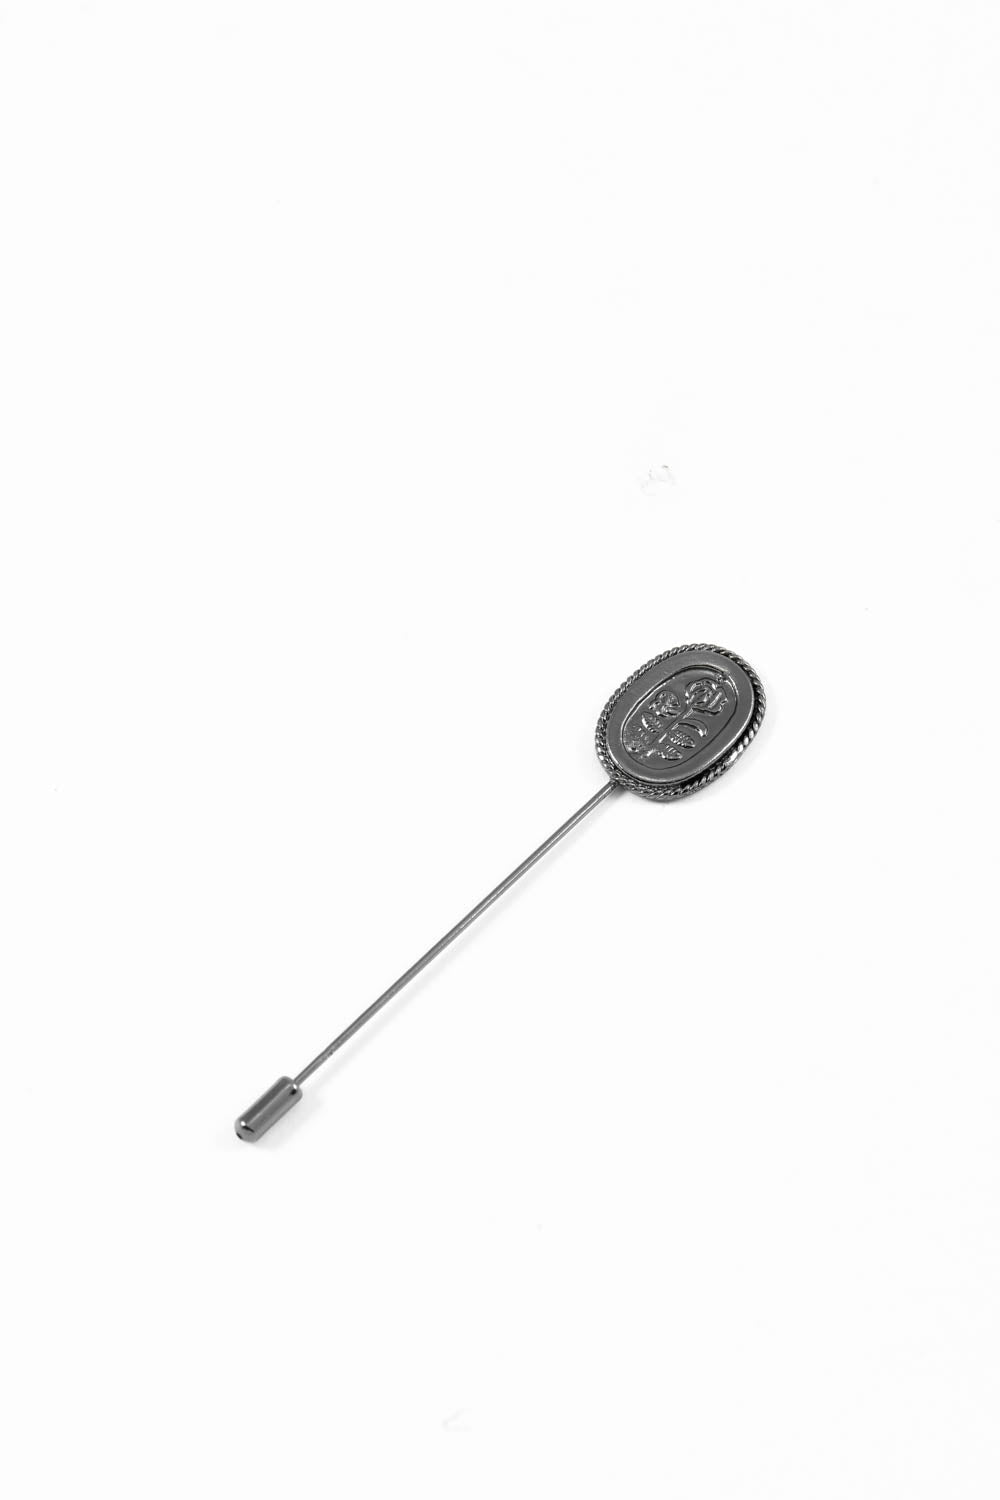 Amama,SubRosa Lapel Pin in Gunmetal